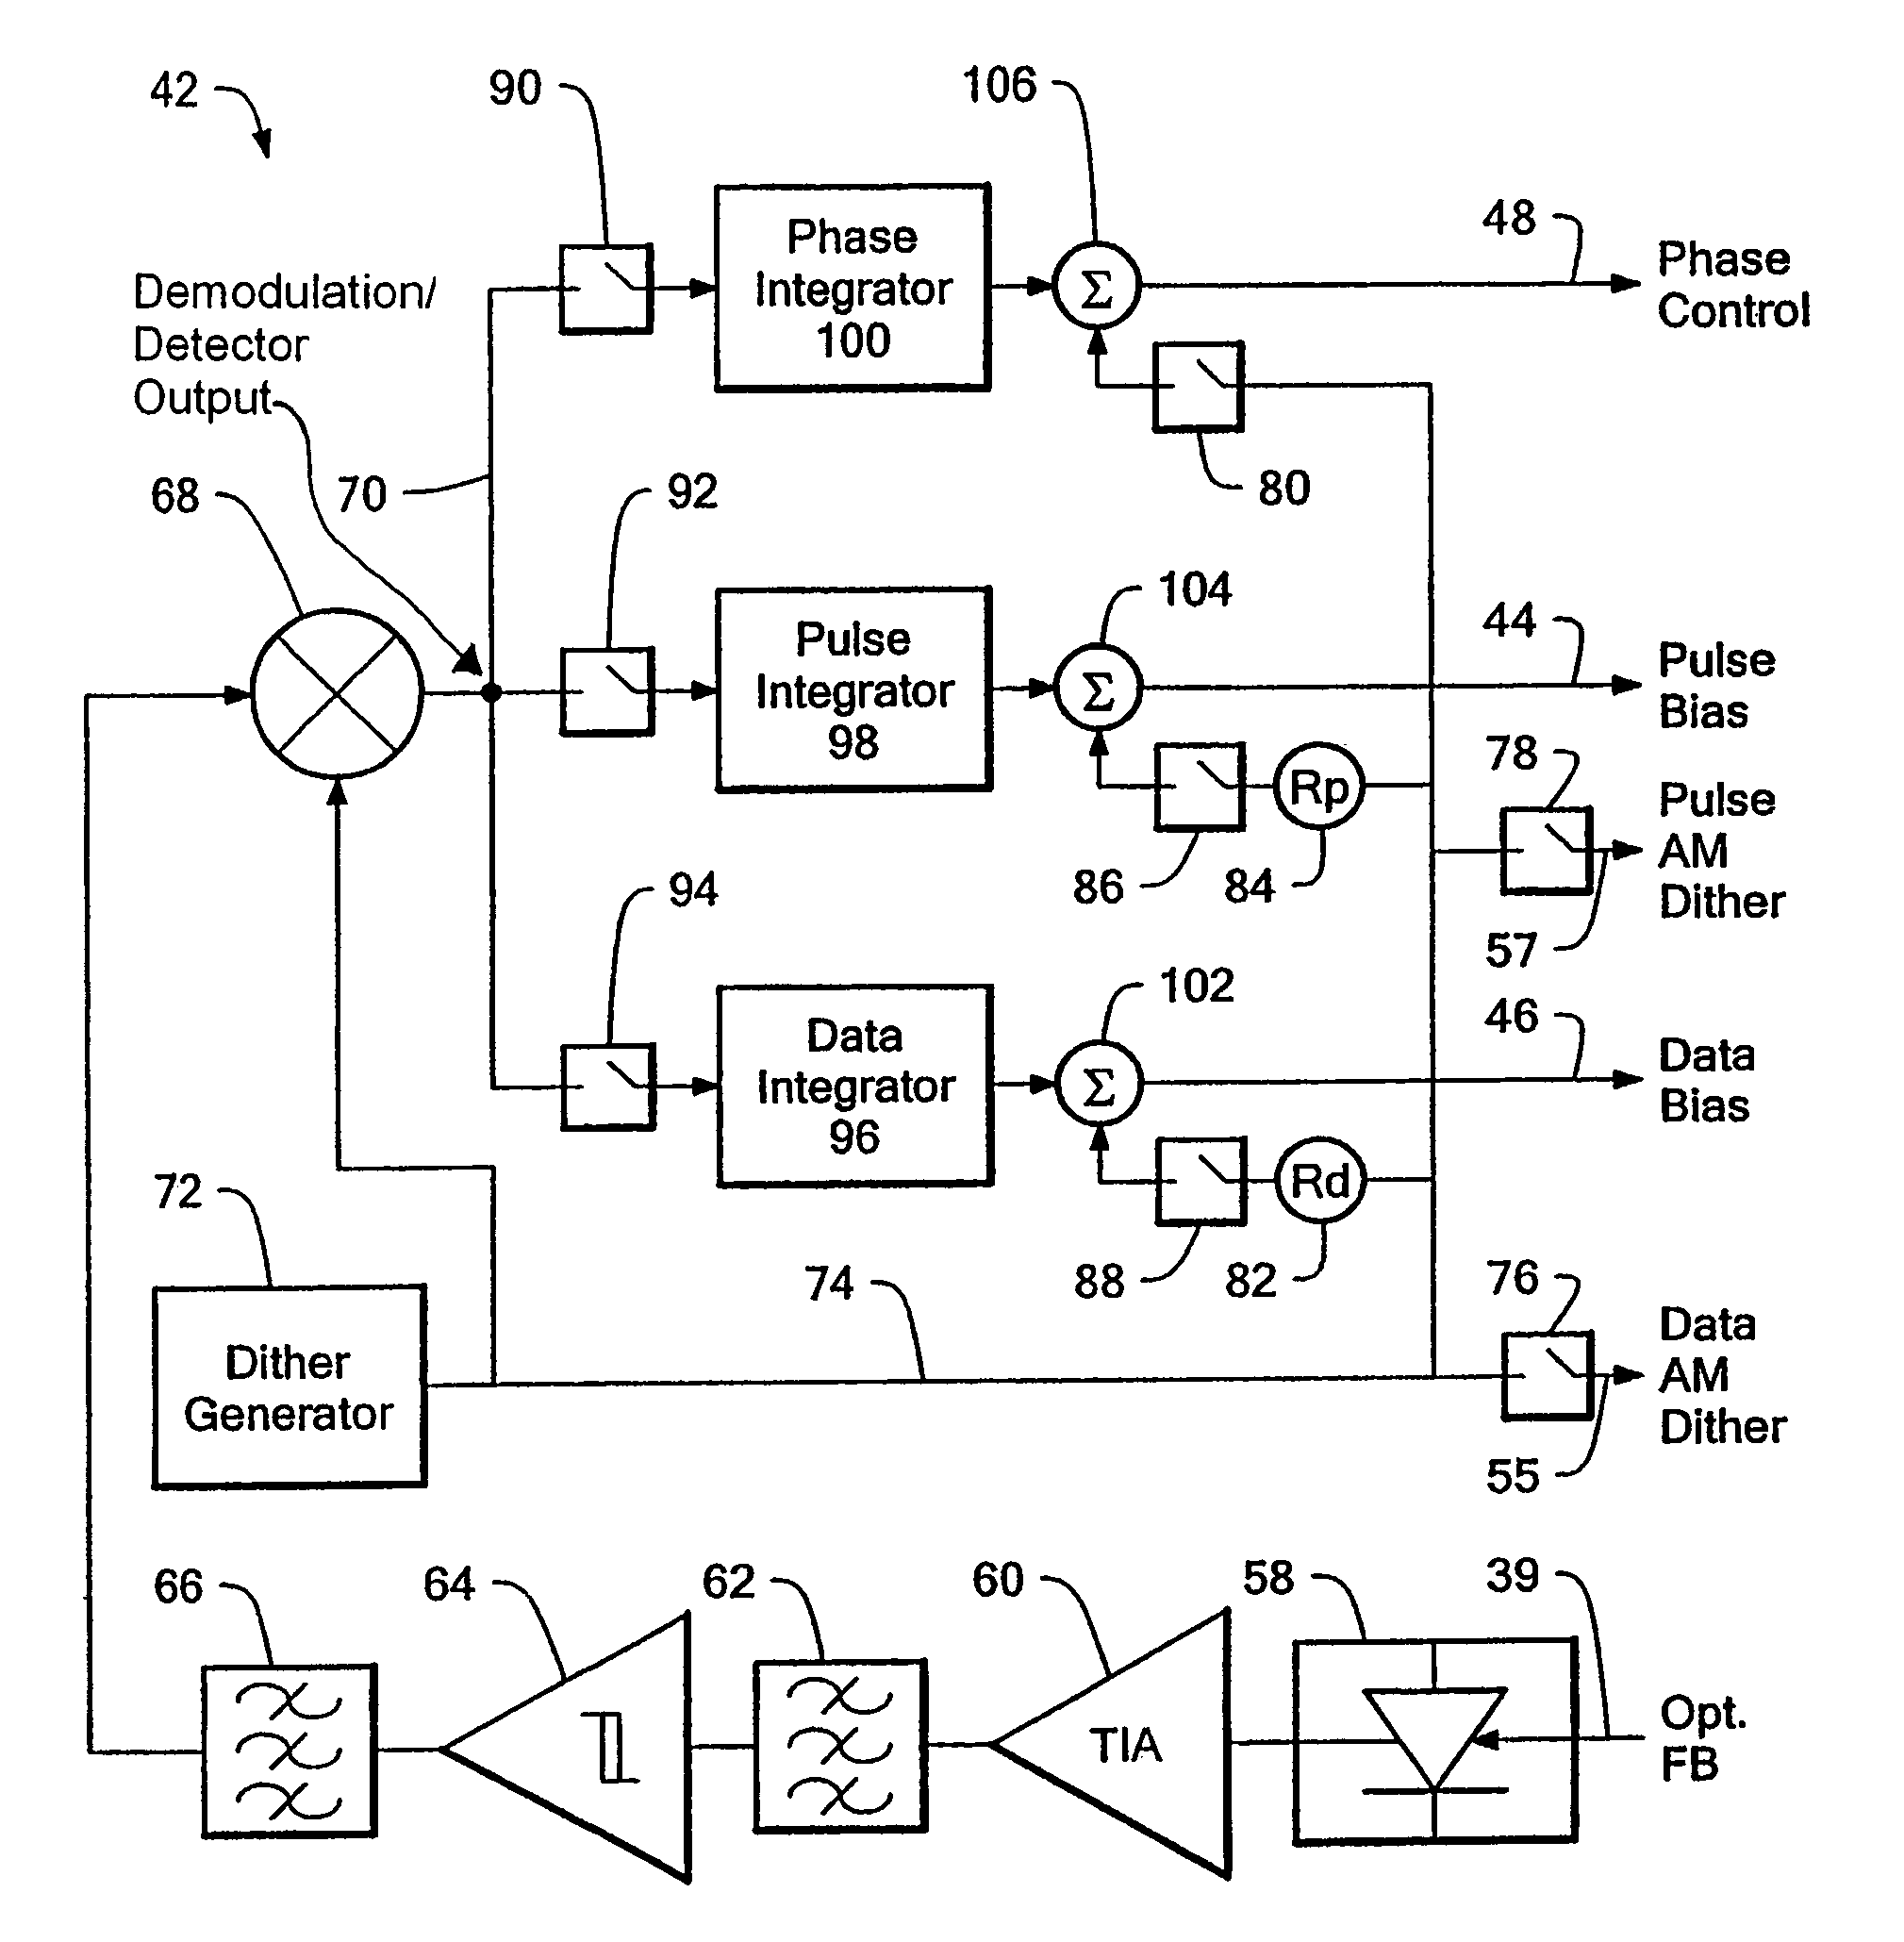 Control of an optical modulator for desired biasing of data and pulse modulators